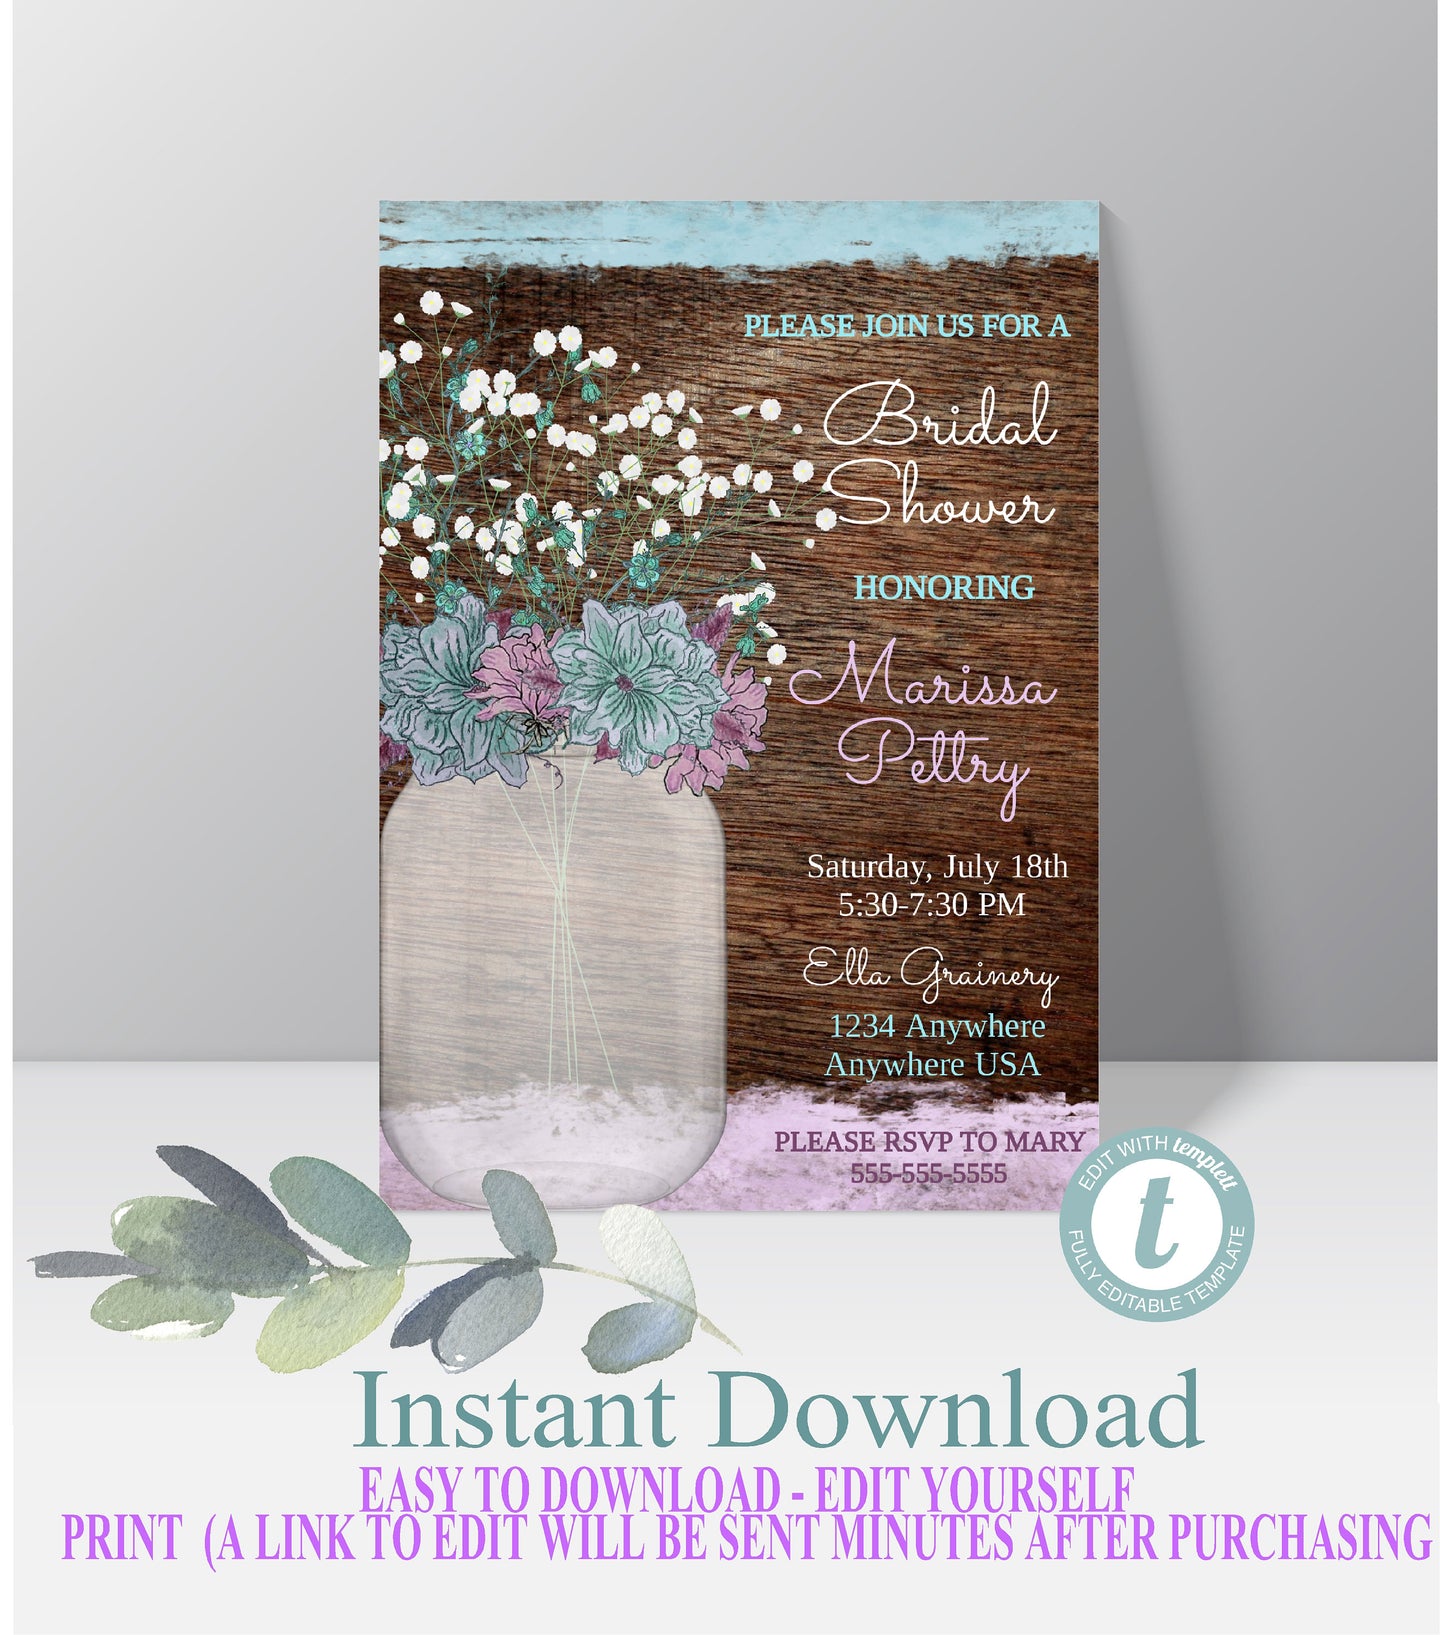 Baby's Breath Bridal Shower Rustic Mason Jar Invitation, Country invite, Violet Teal Flowers, Bridal Boho floral Watercolor, You edit